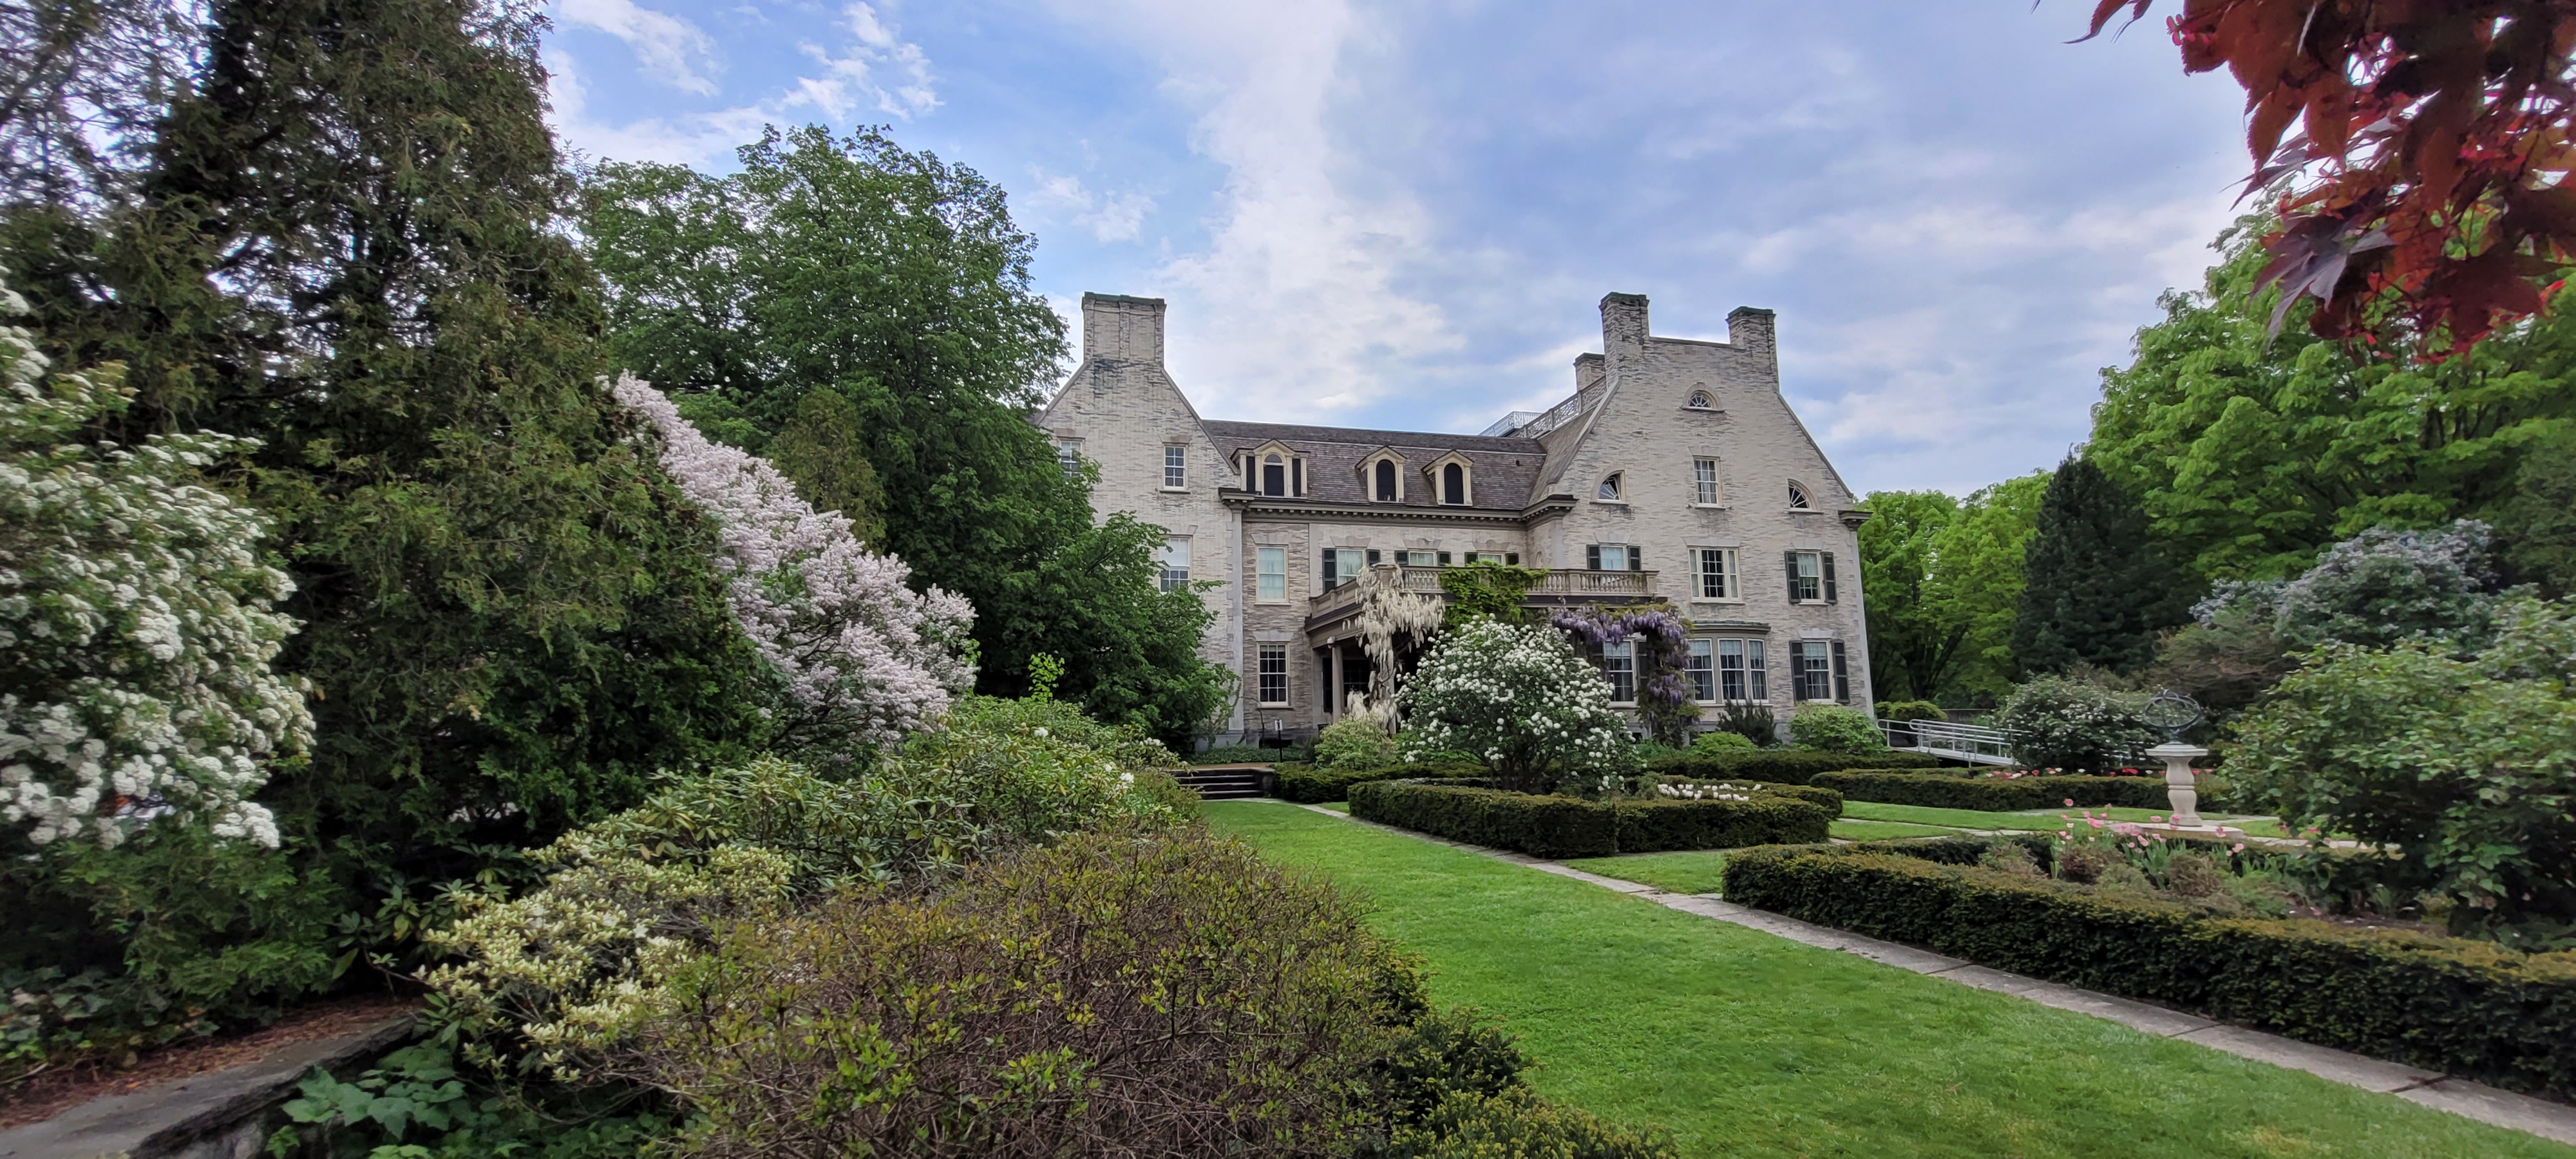 The George Eastman estate